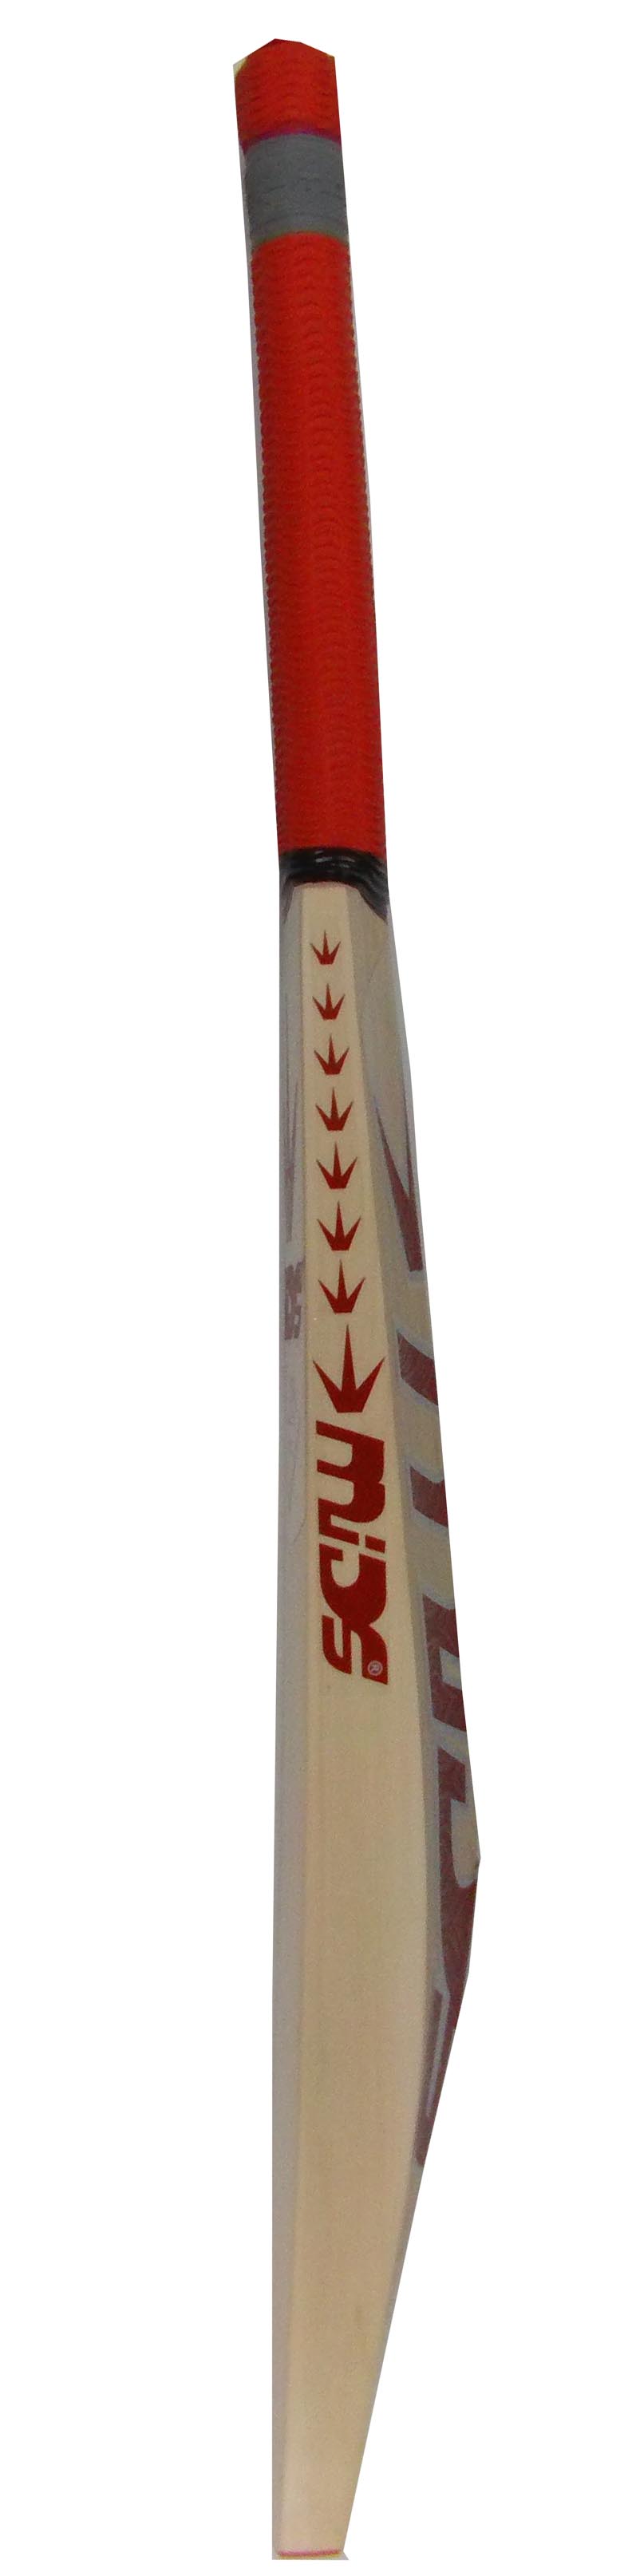 Mids Z Ten Grade 1 English Willow Cricket Bat RRP 350.00 SH Free bag